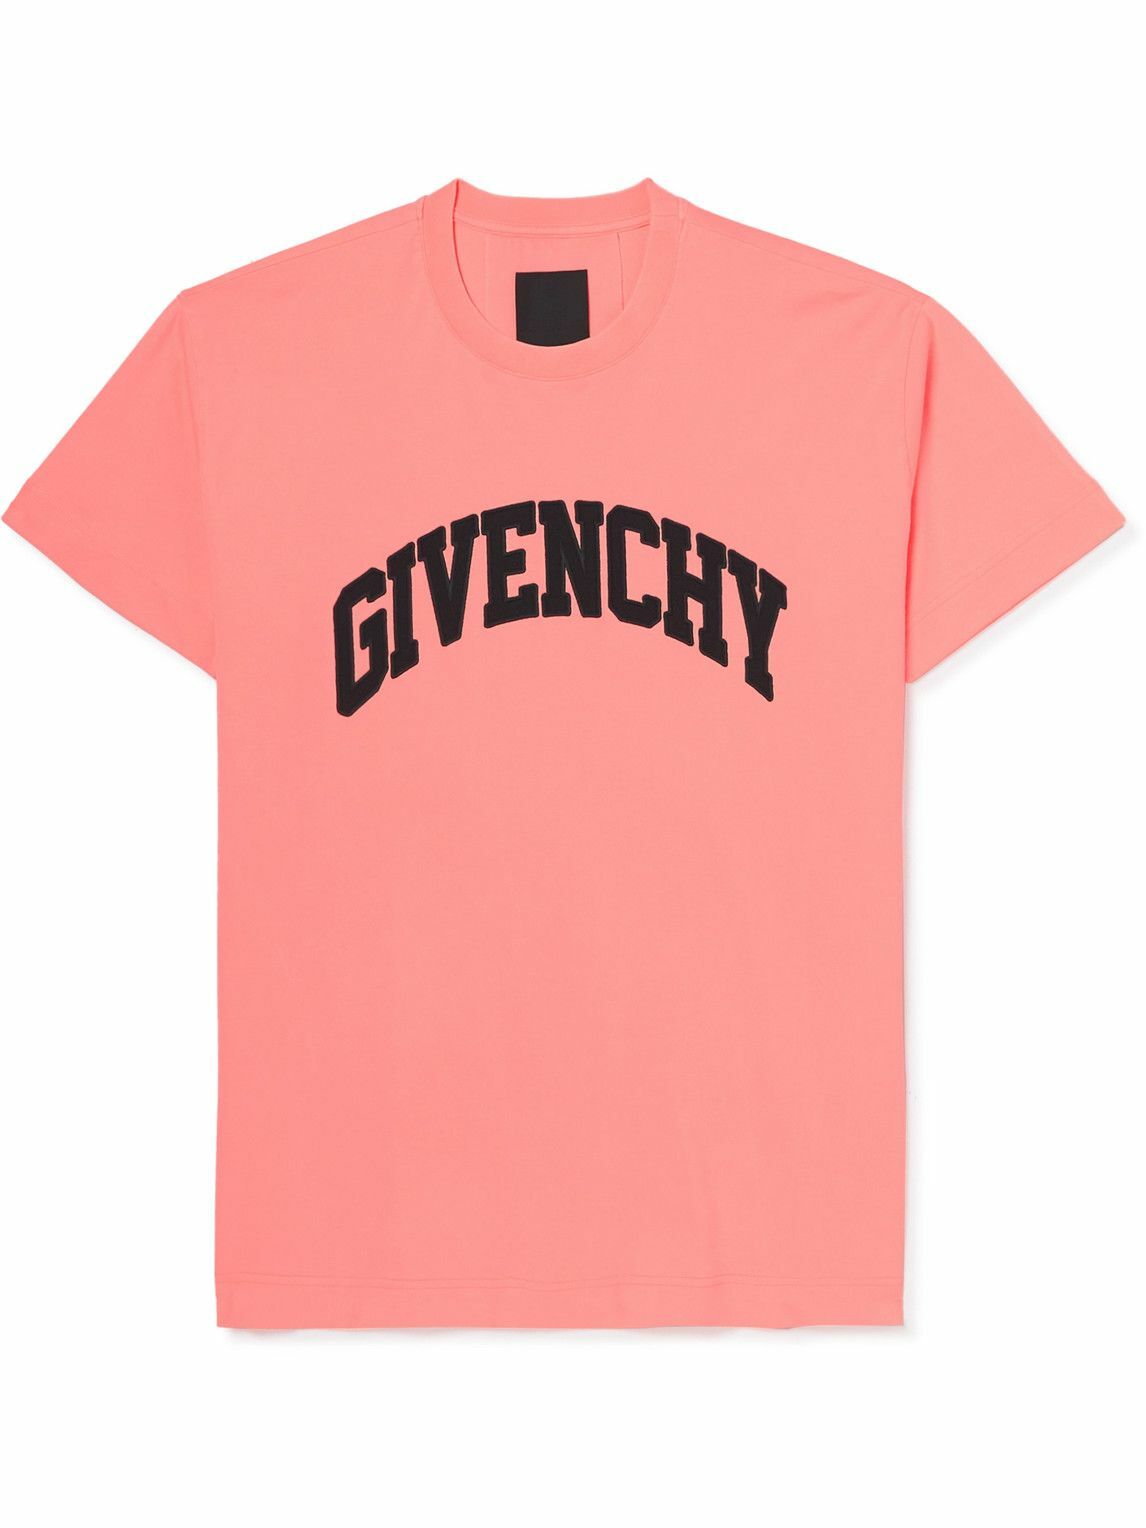 Givenchy - Logo-Appliquéd Cotton-Jersey T-Shirt - Pink Givenchy